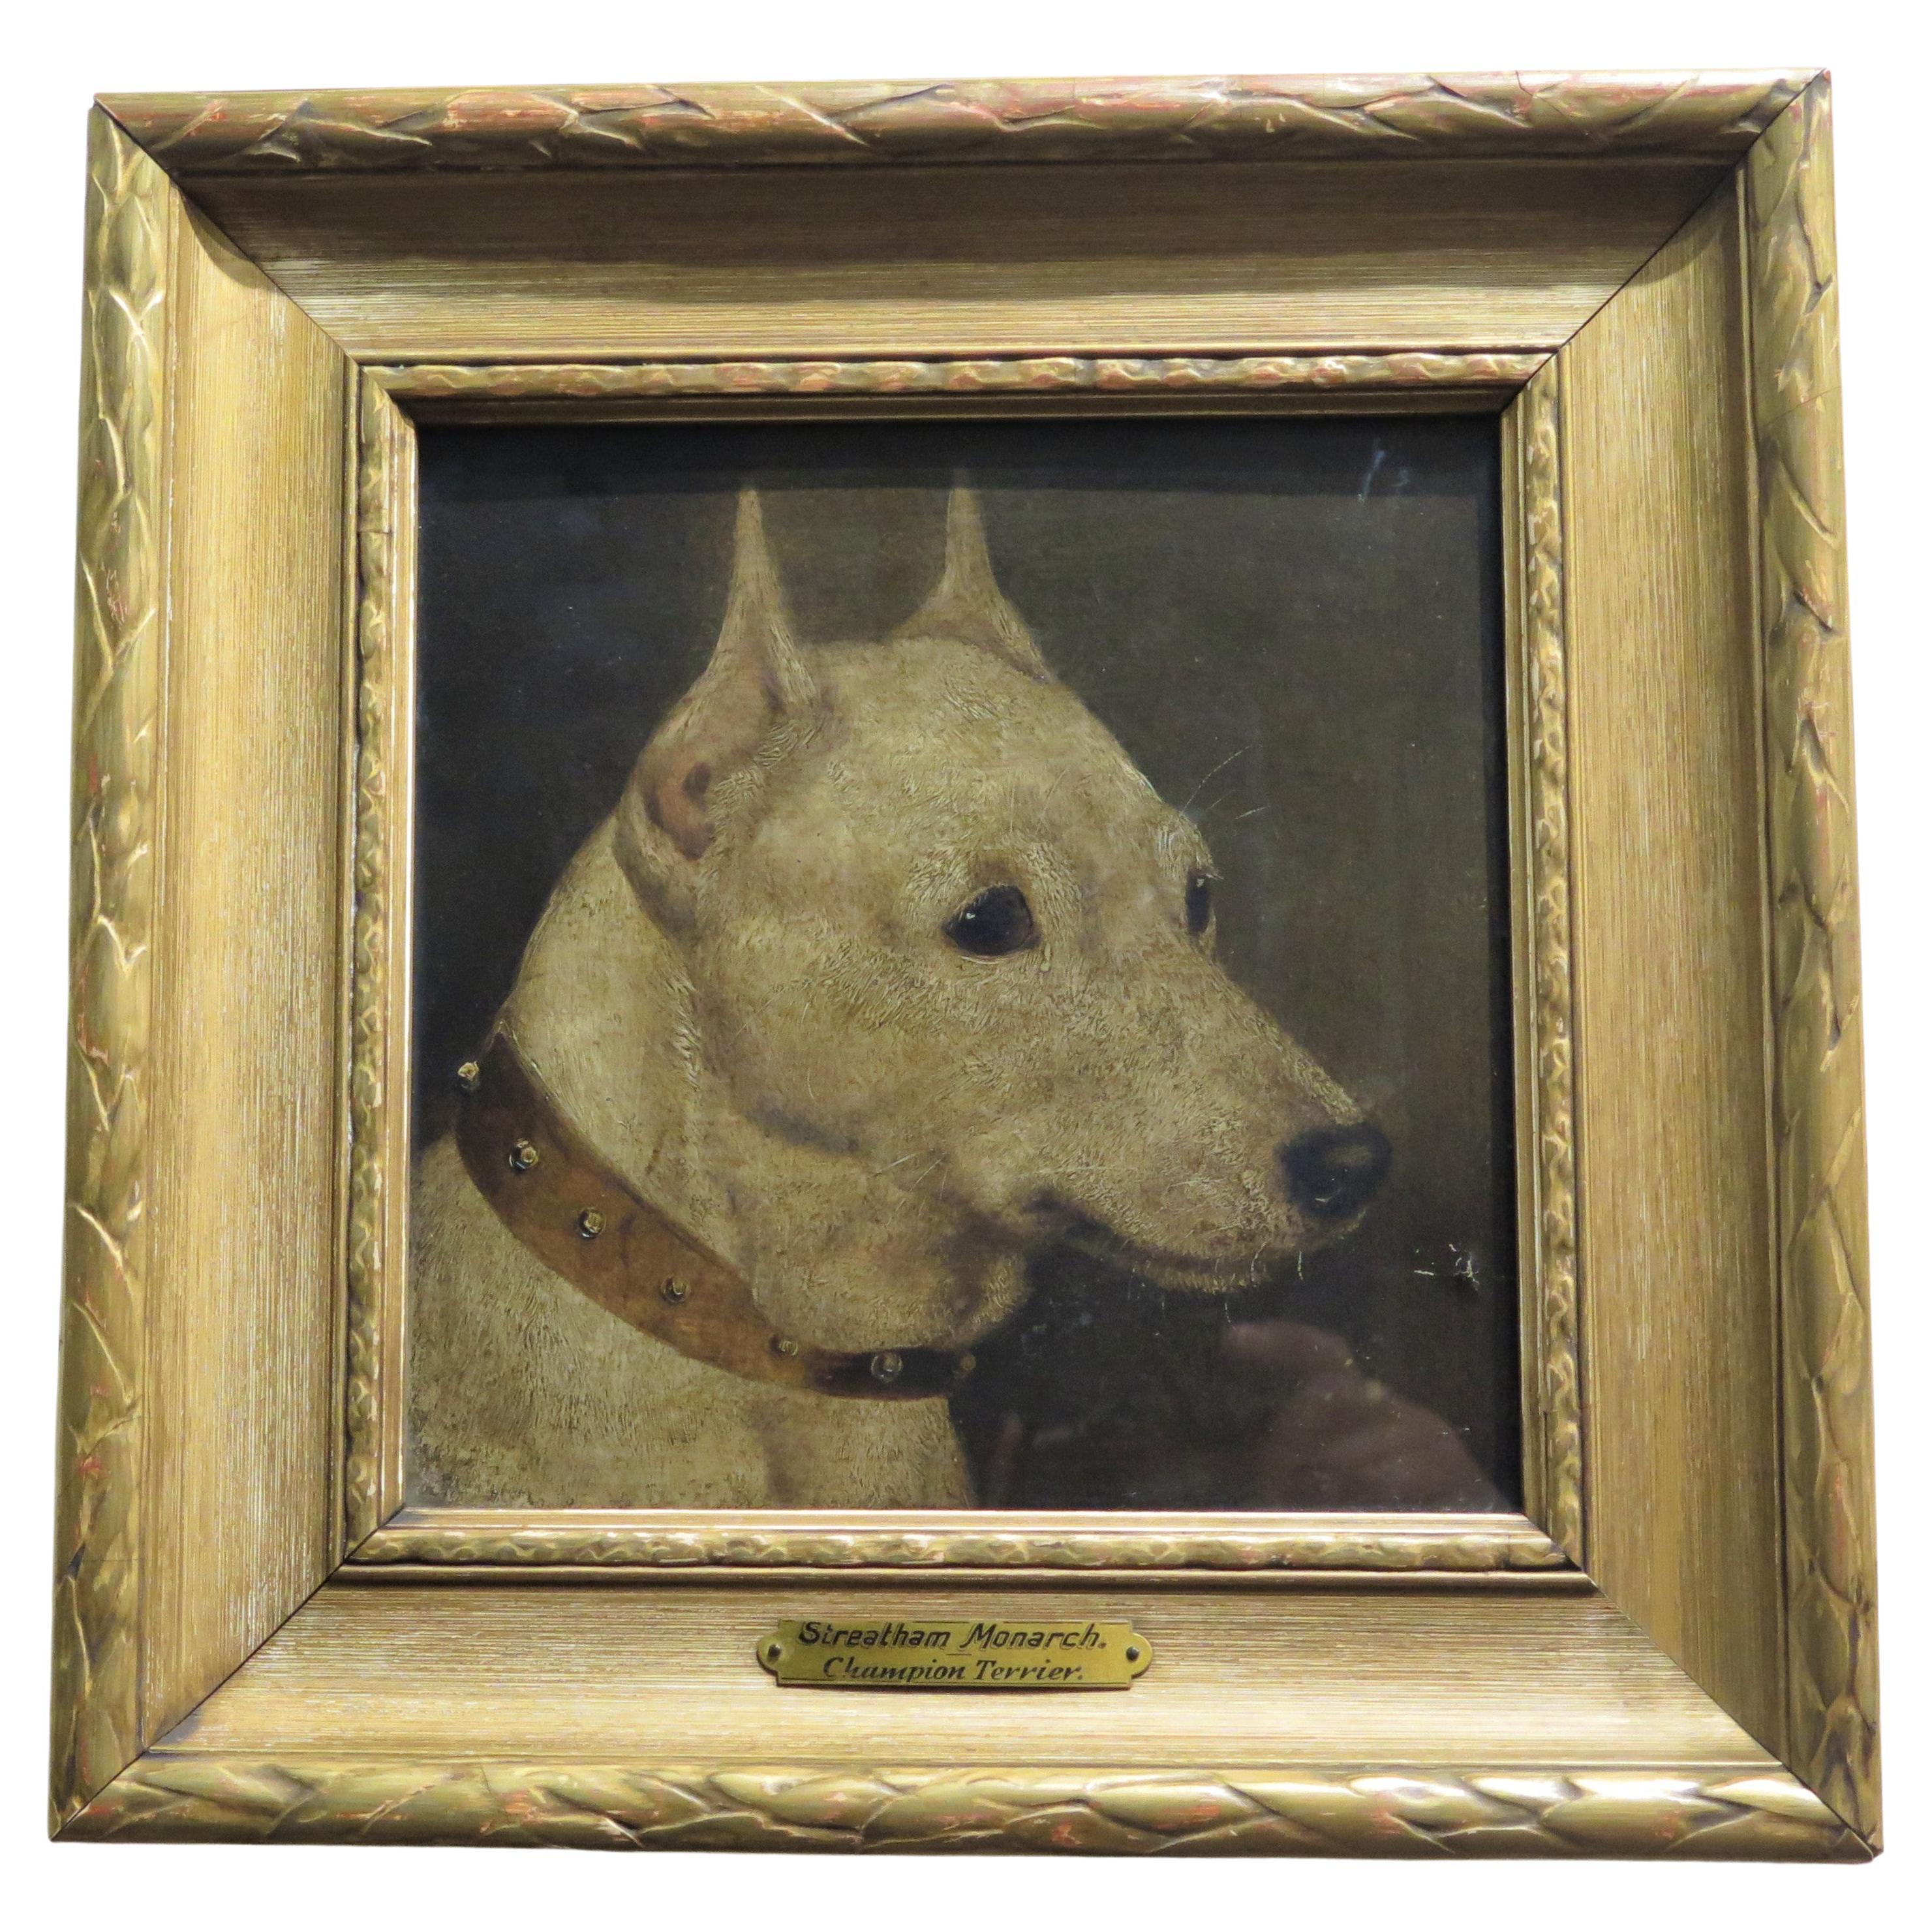 "Streatham Monarch" Champion Terrier by Edward Aistrop (England, 1880-1920) For Sale